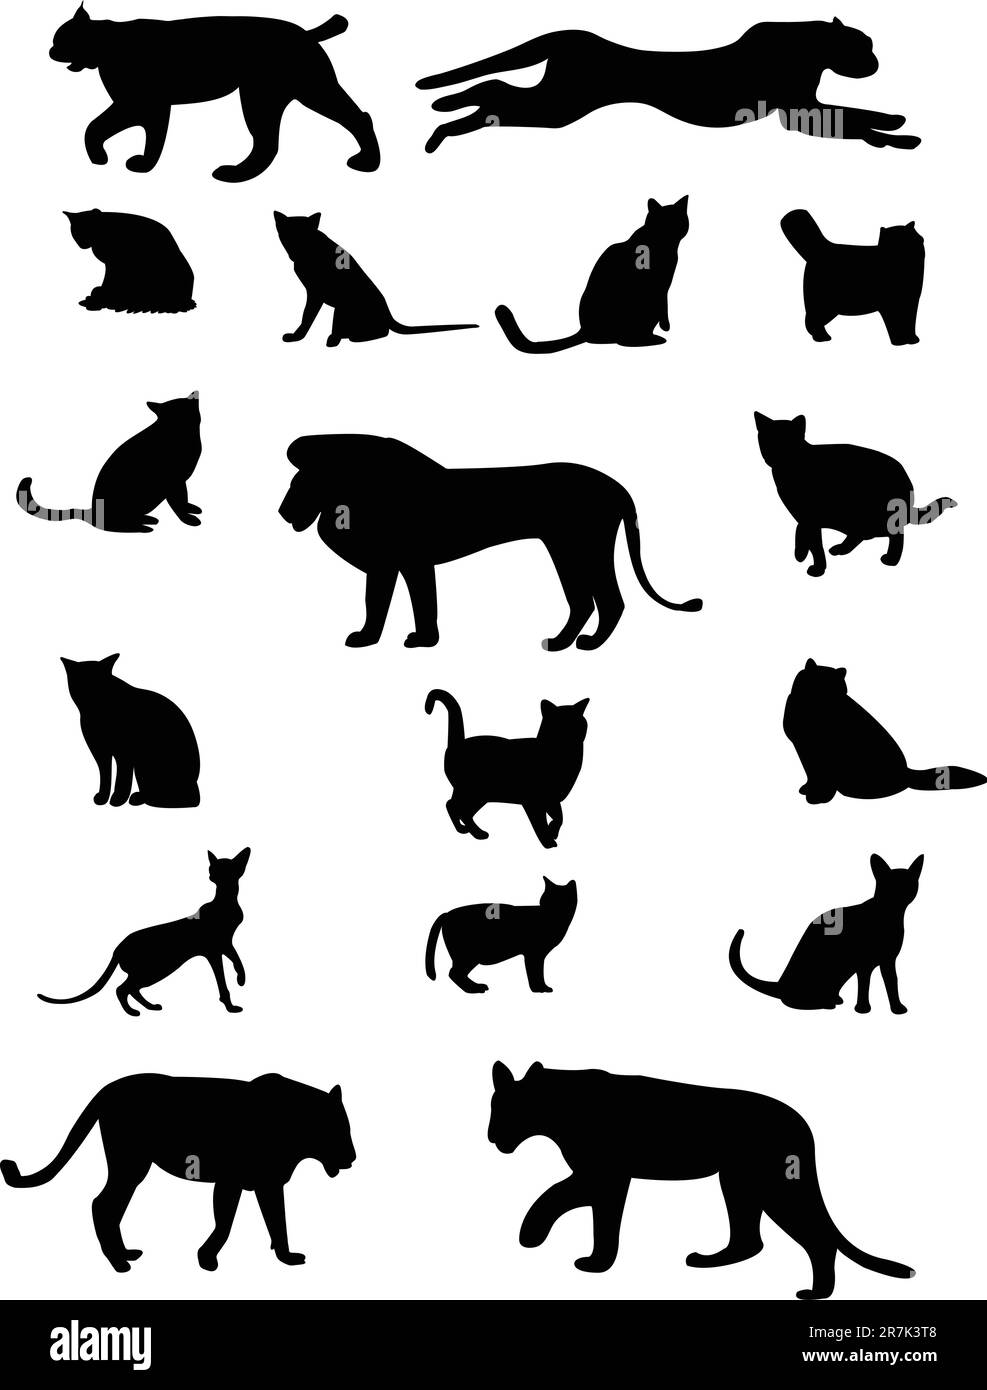 Kollektion der Silhouette der Katzenfamilie - Vektor Stock Vektor